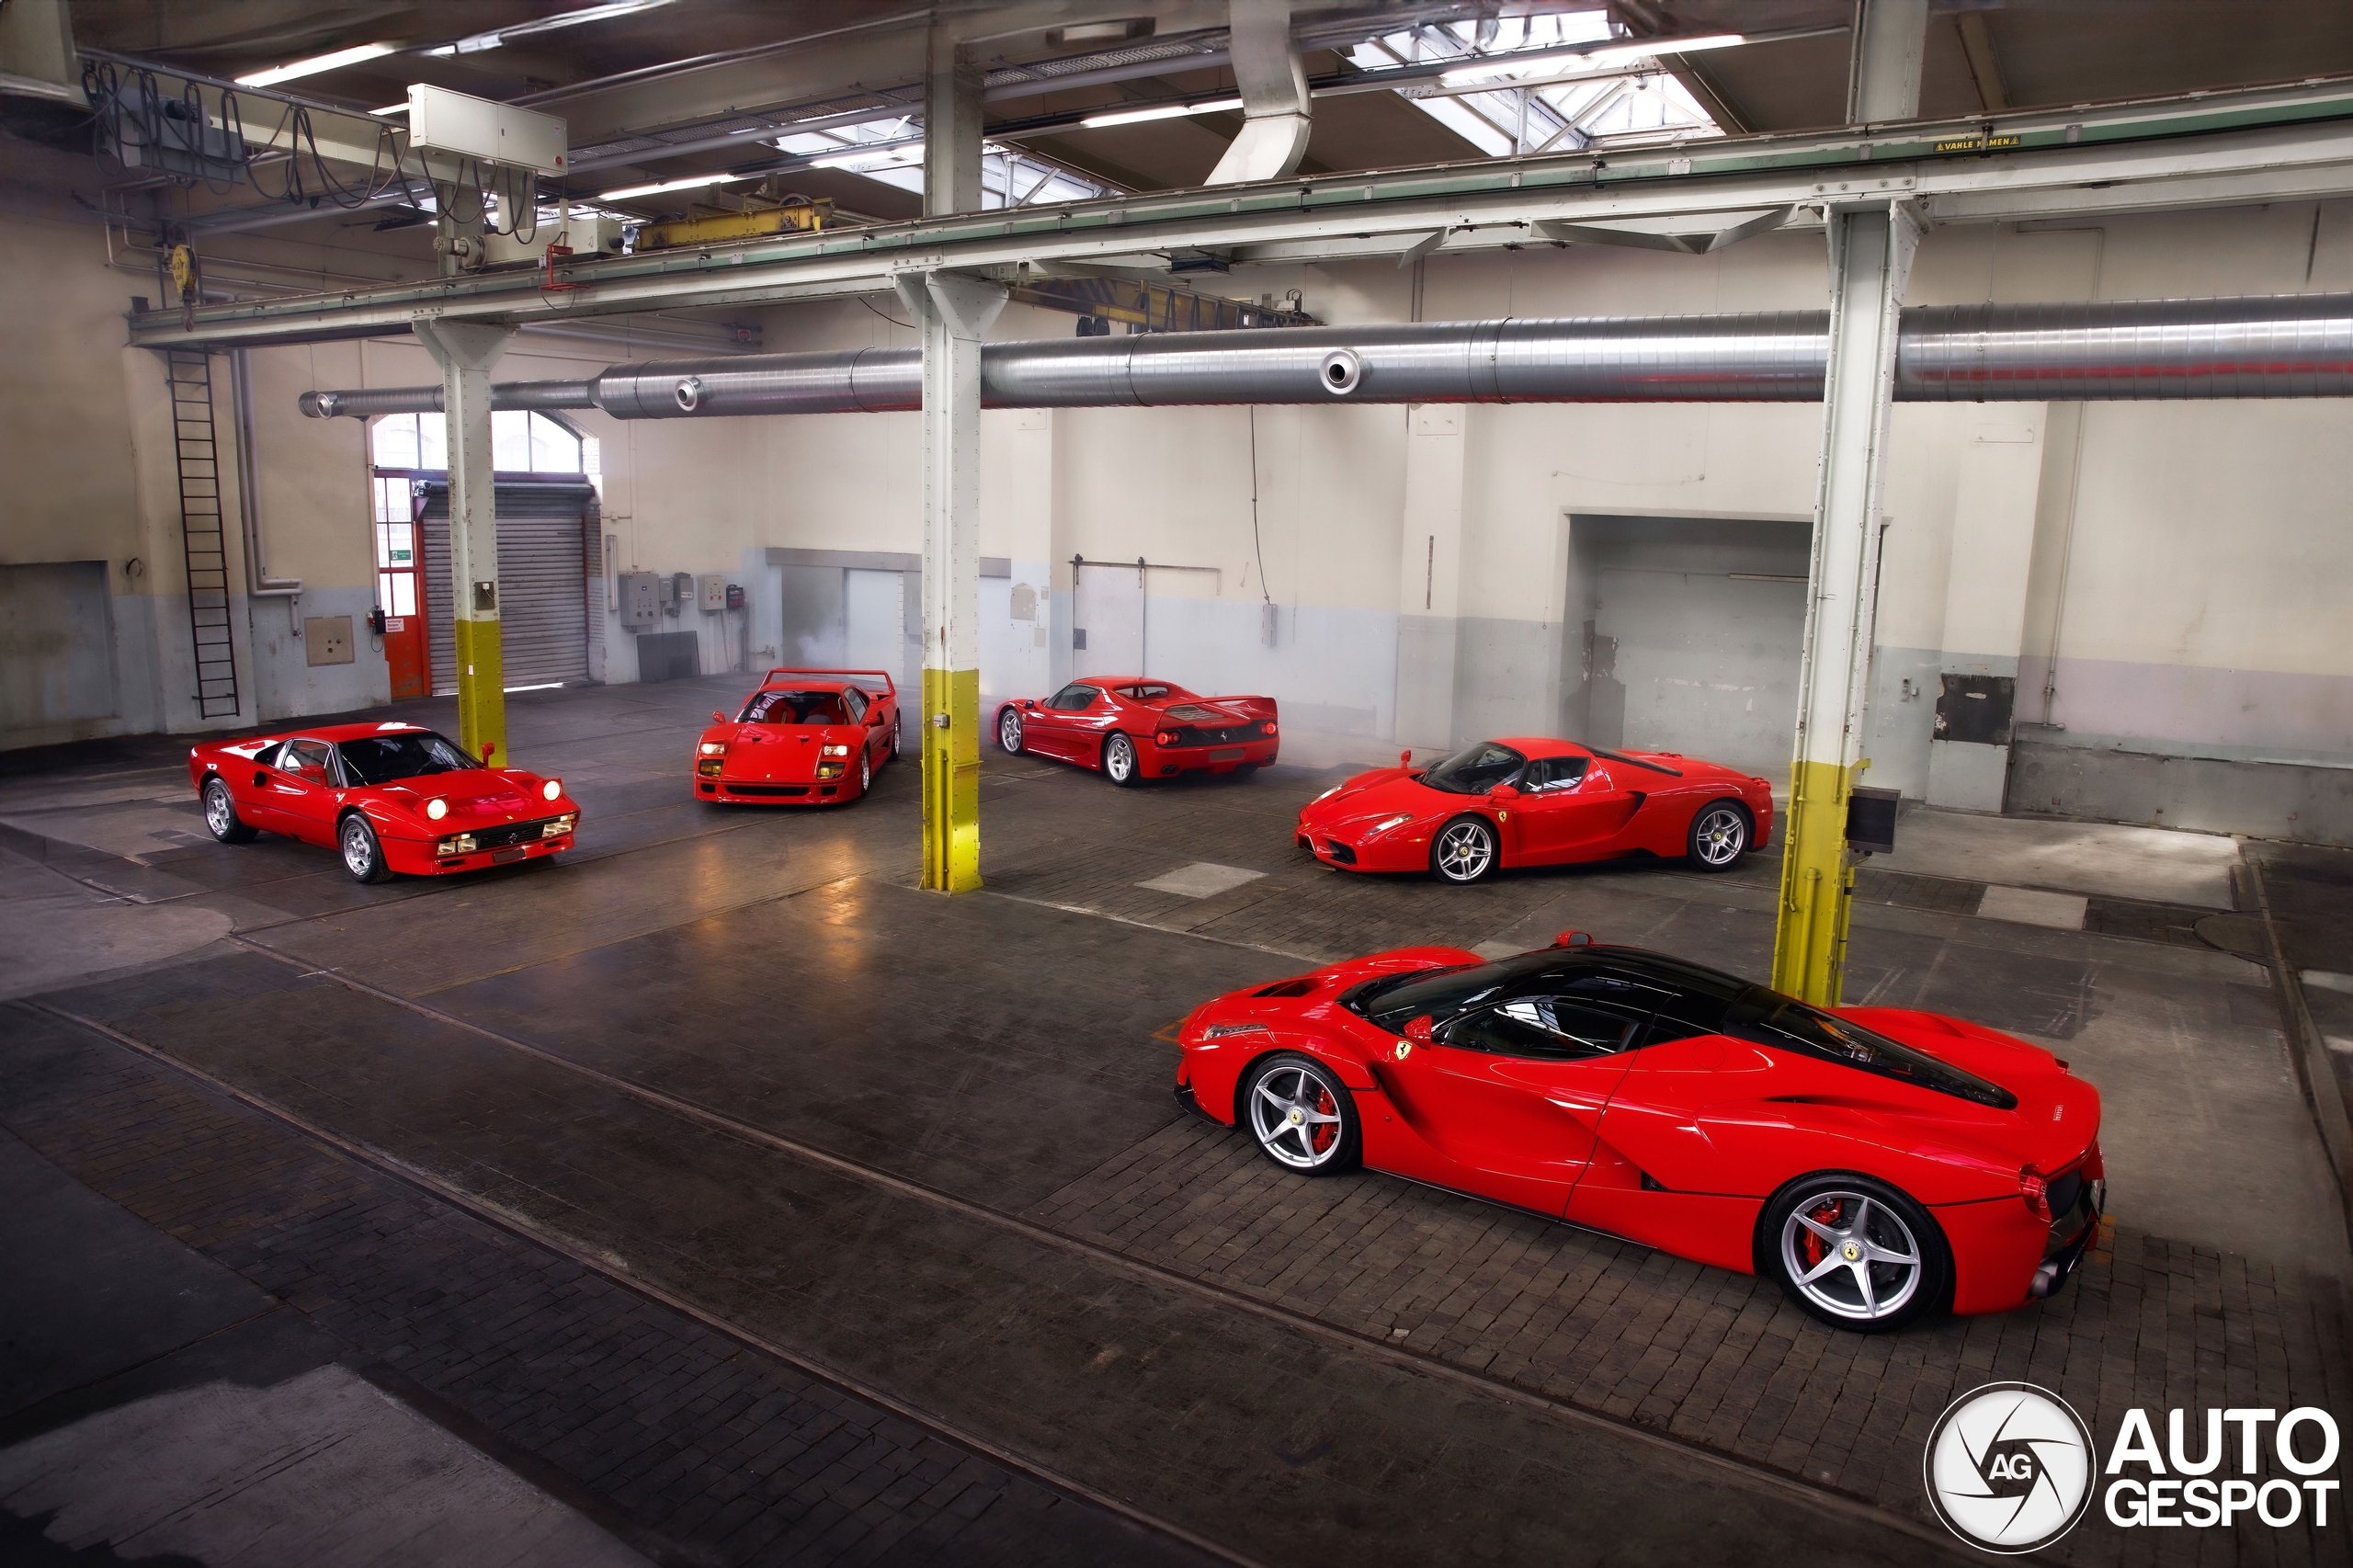 Ferrari's big five united in one hall